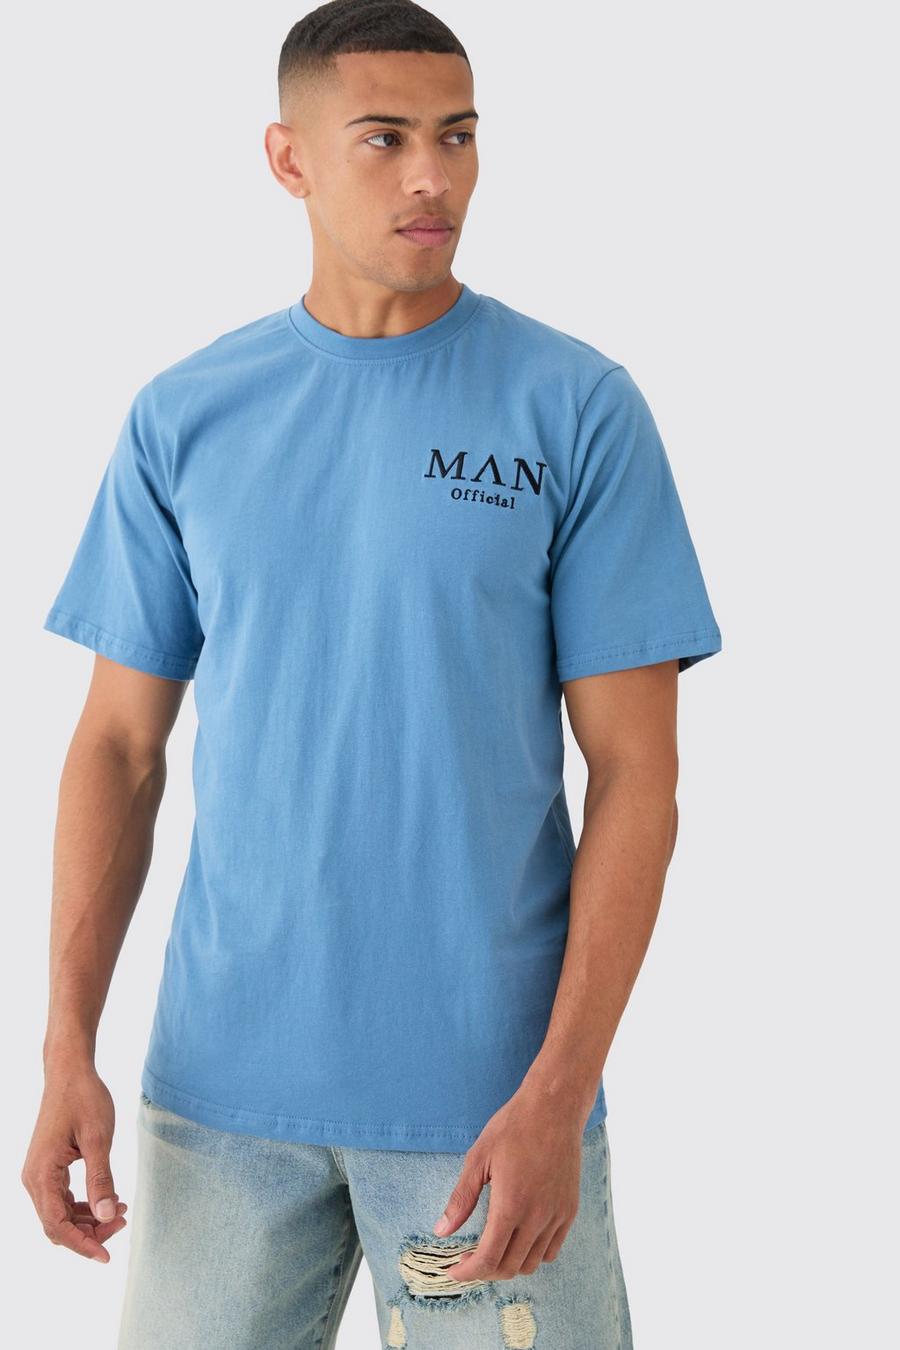 Basic Man Rundhals T-Shirt, Dusty blue